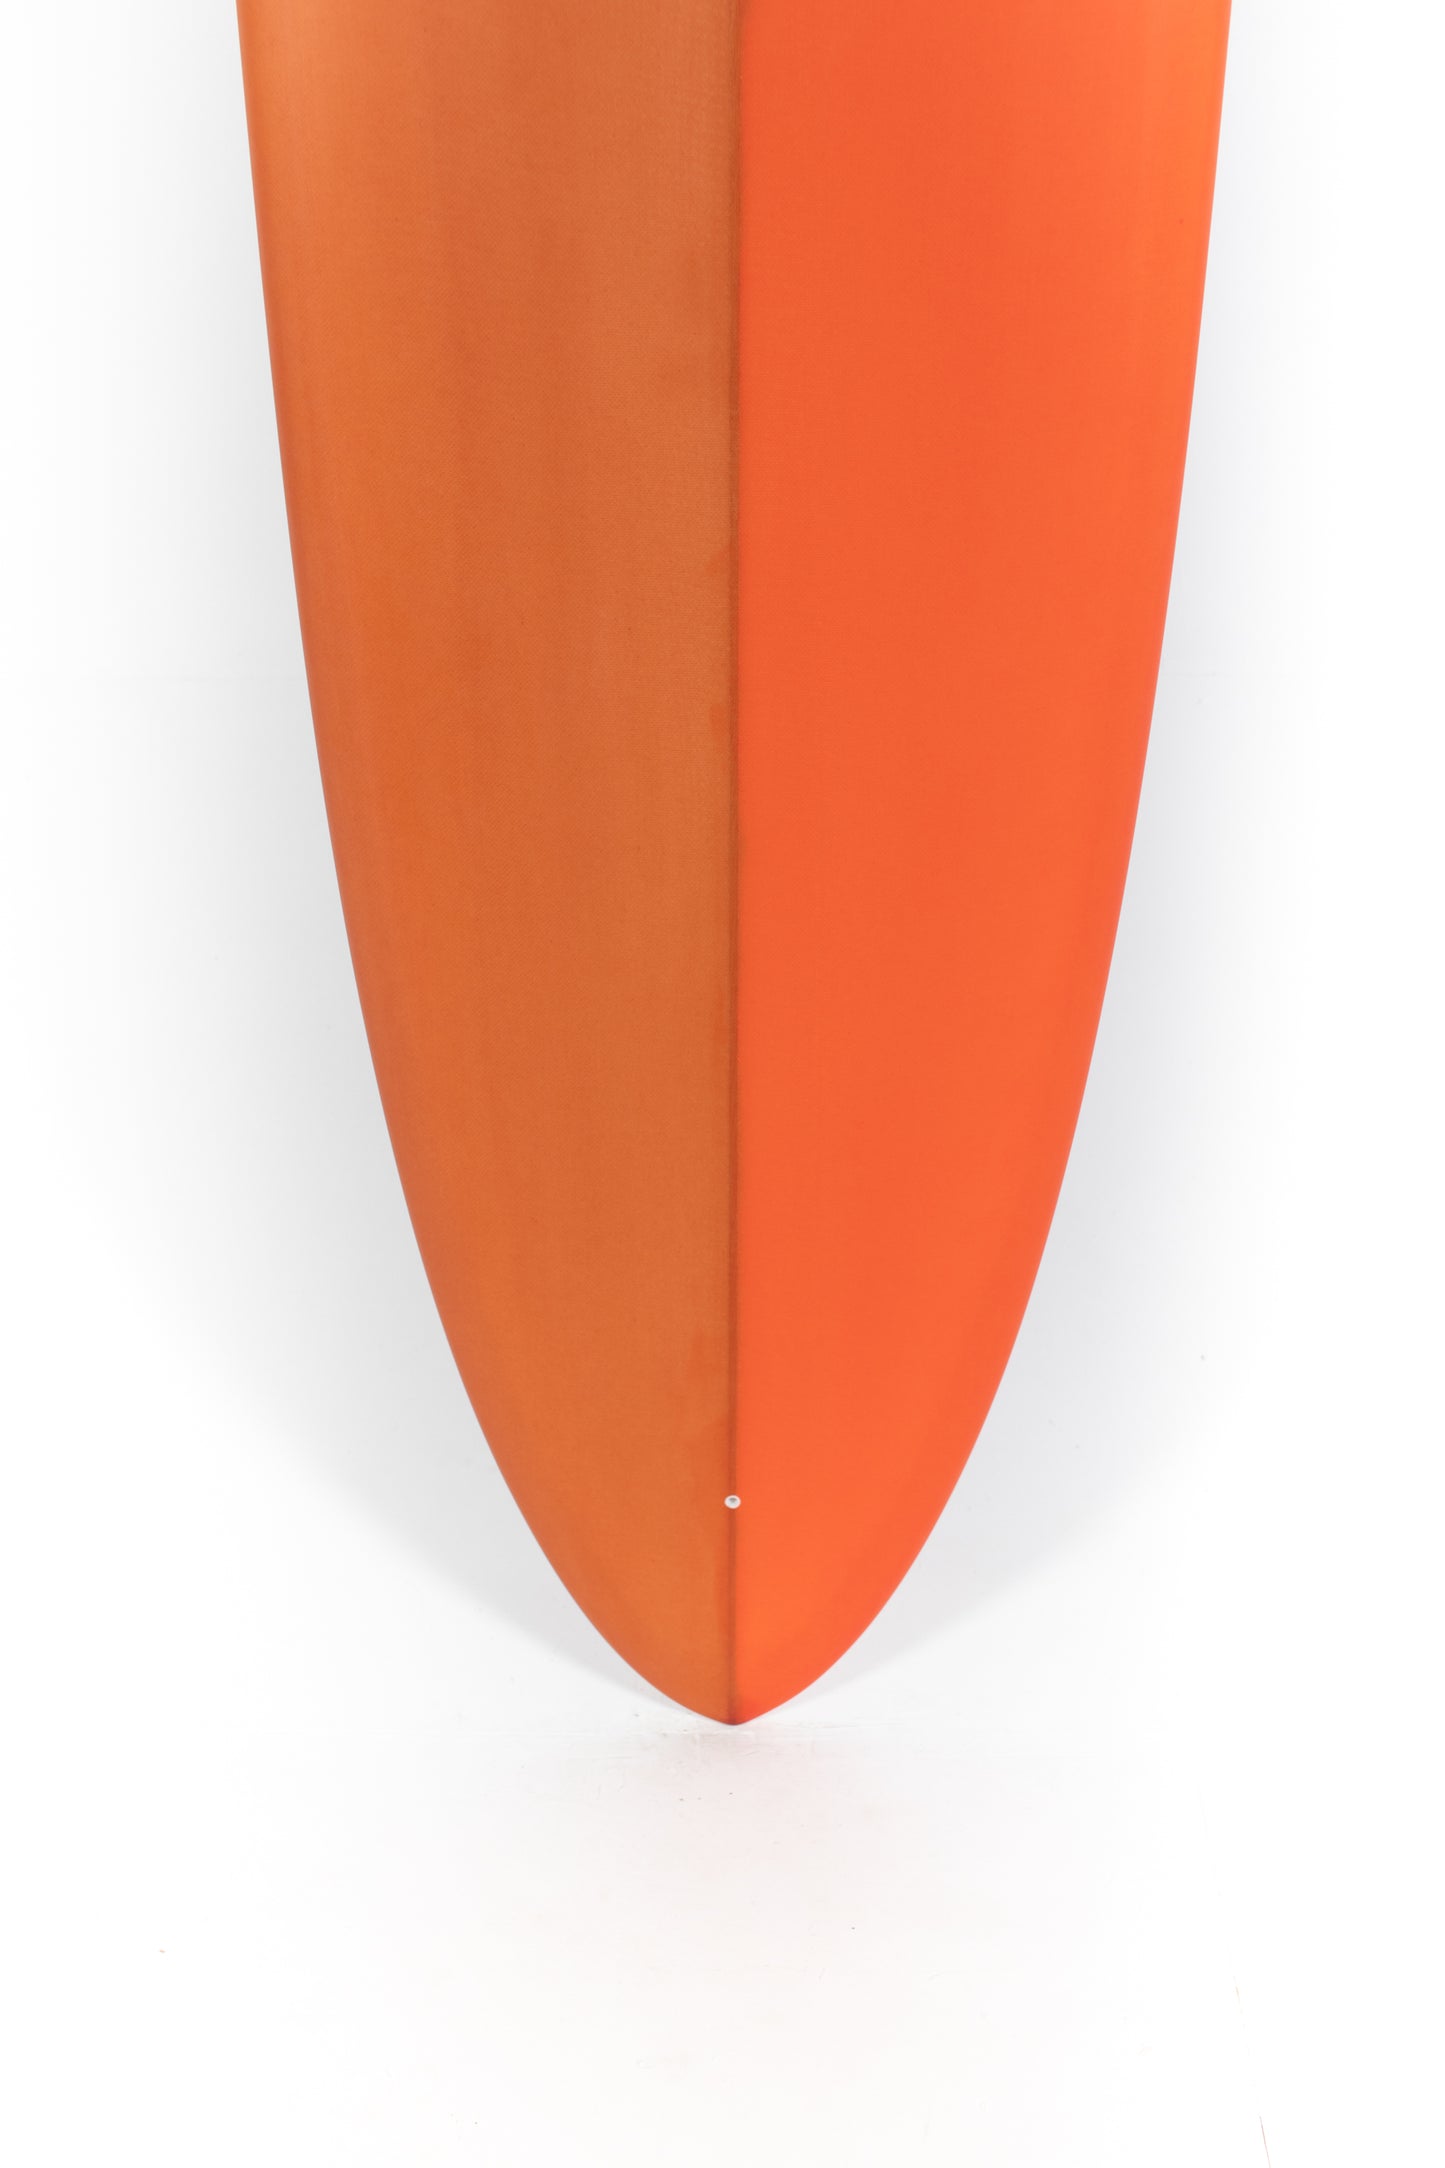 
                  
                    Pukas Surf Shop - Adrokultura Surfboards - SINGLE EGG - 7'4" x 21 1/2 x 2 3/4 - SINGLEEGG74
                  
                